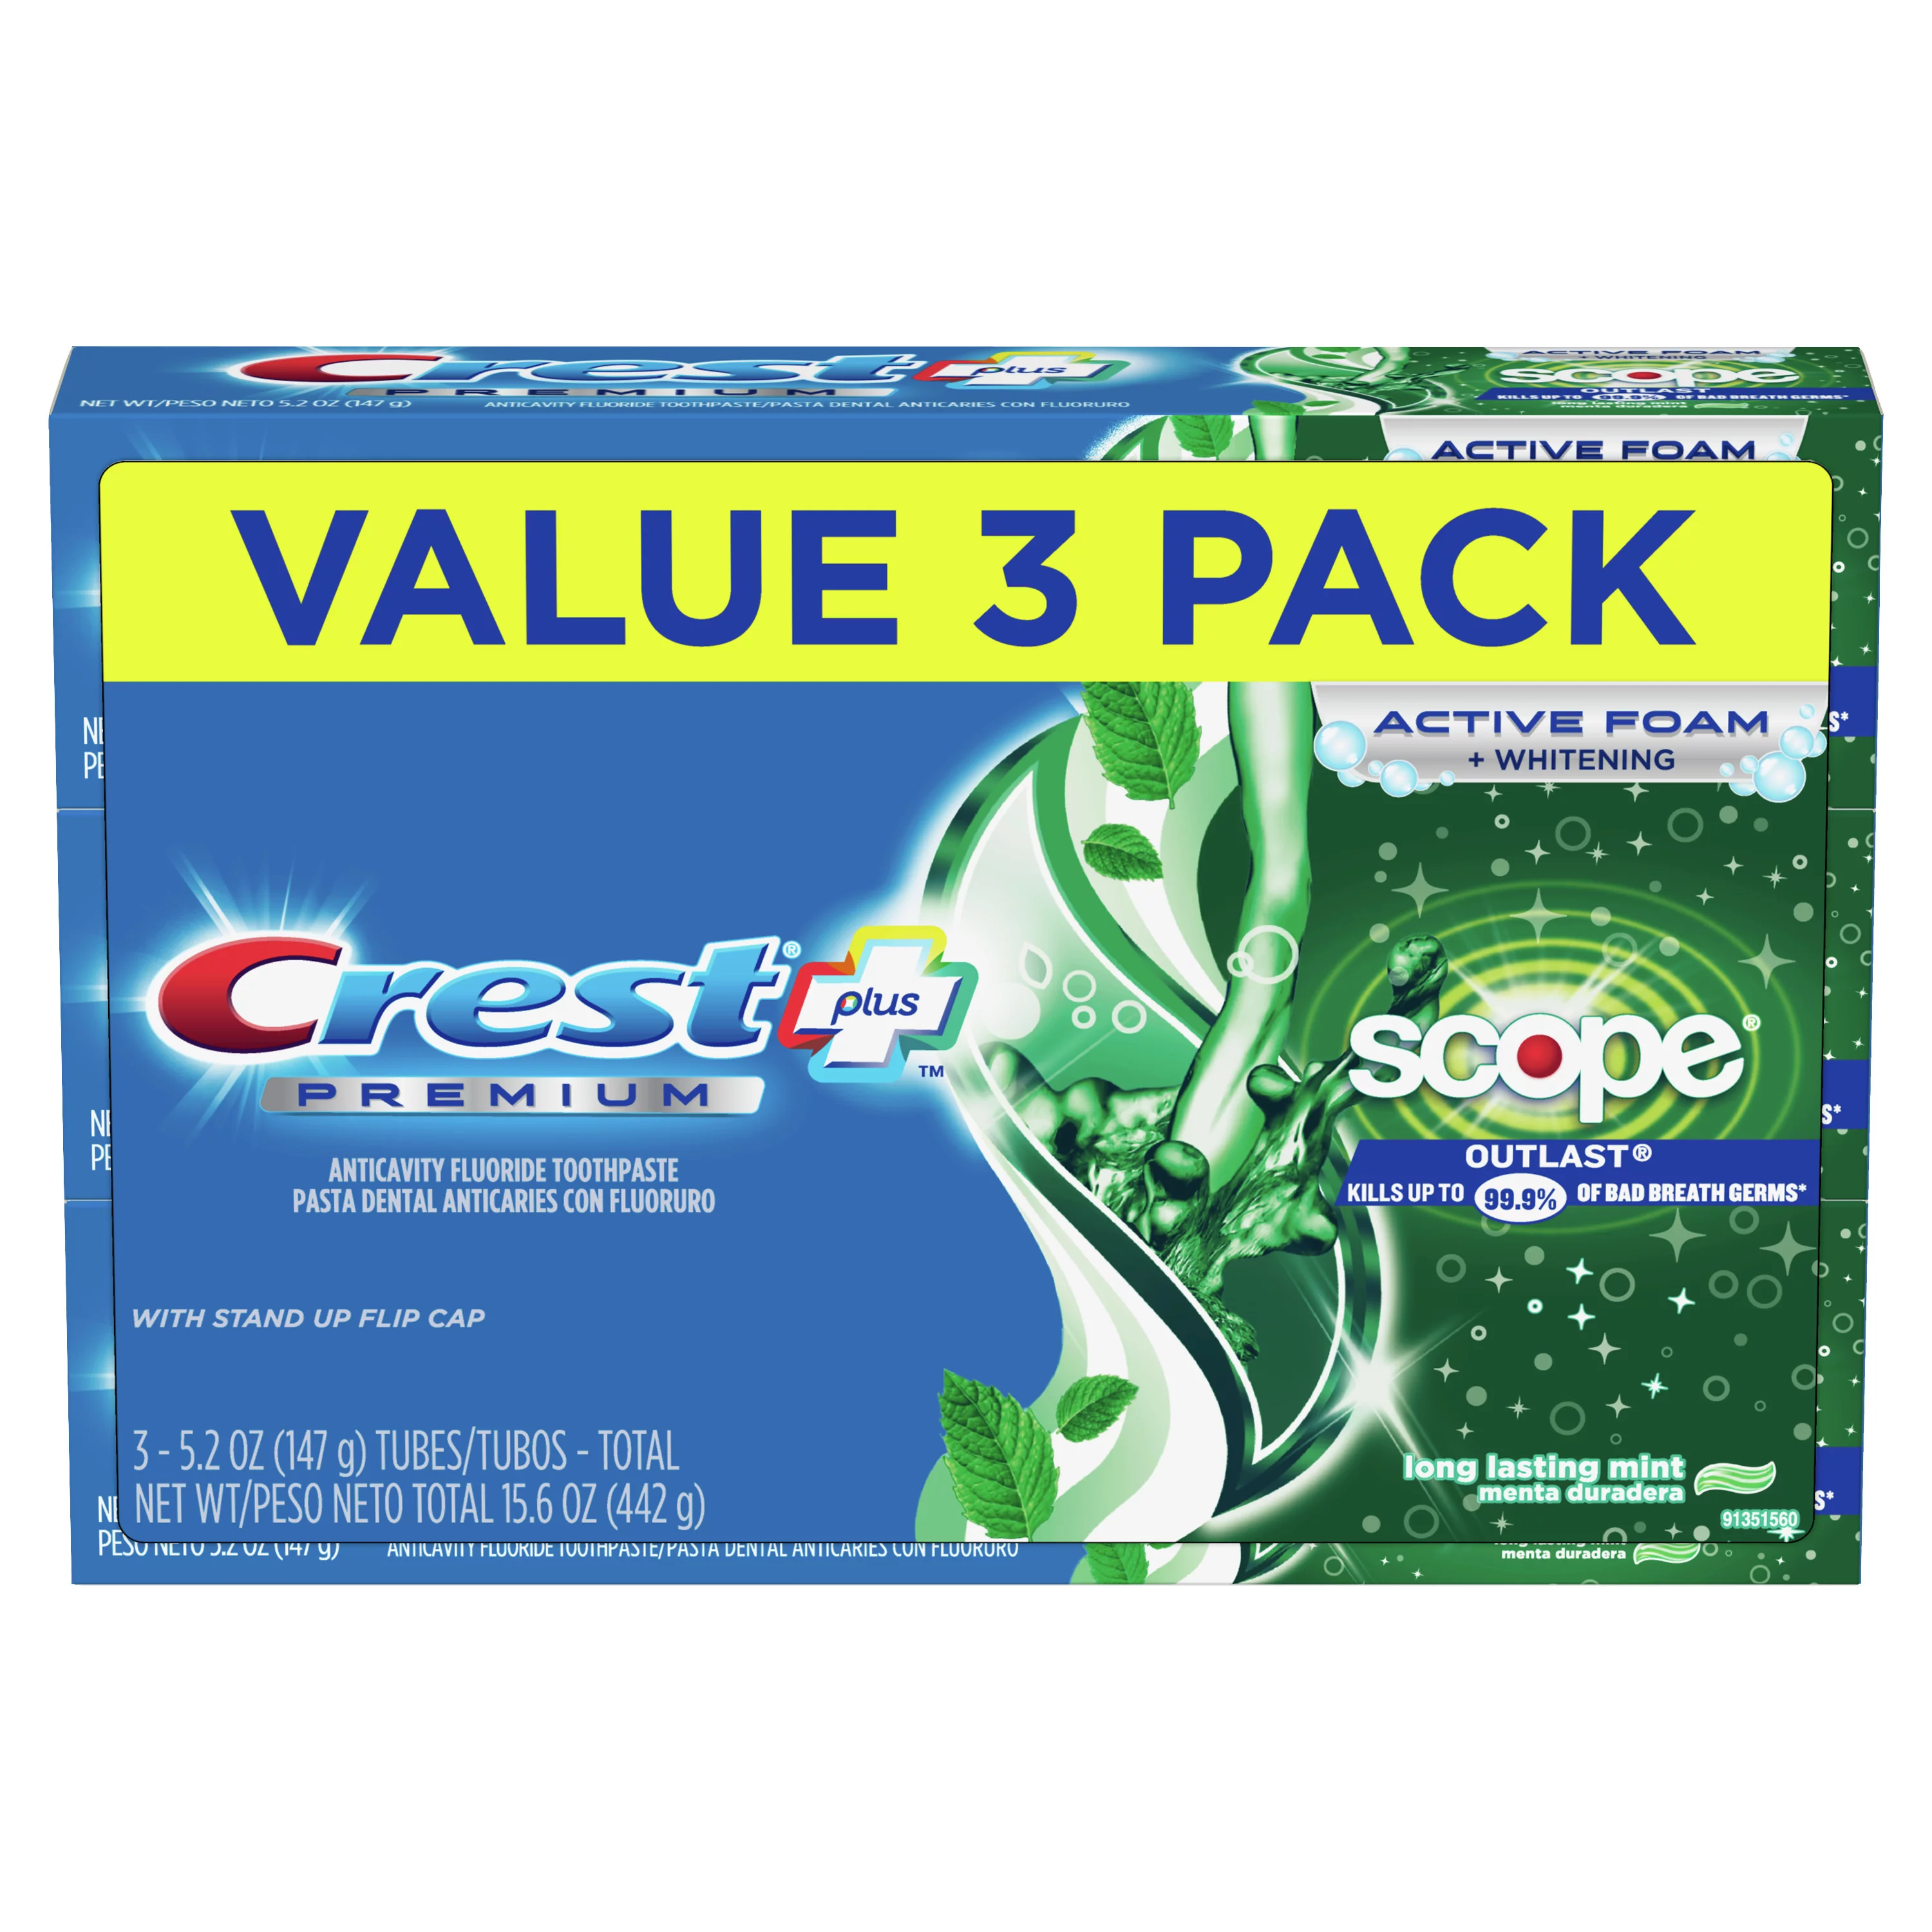 Crest Premium Plus Scope Outlast Toothpaste, Long Lasting Mint Flavor 5.2 oz, Pack of 3